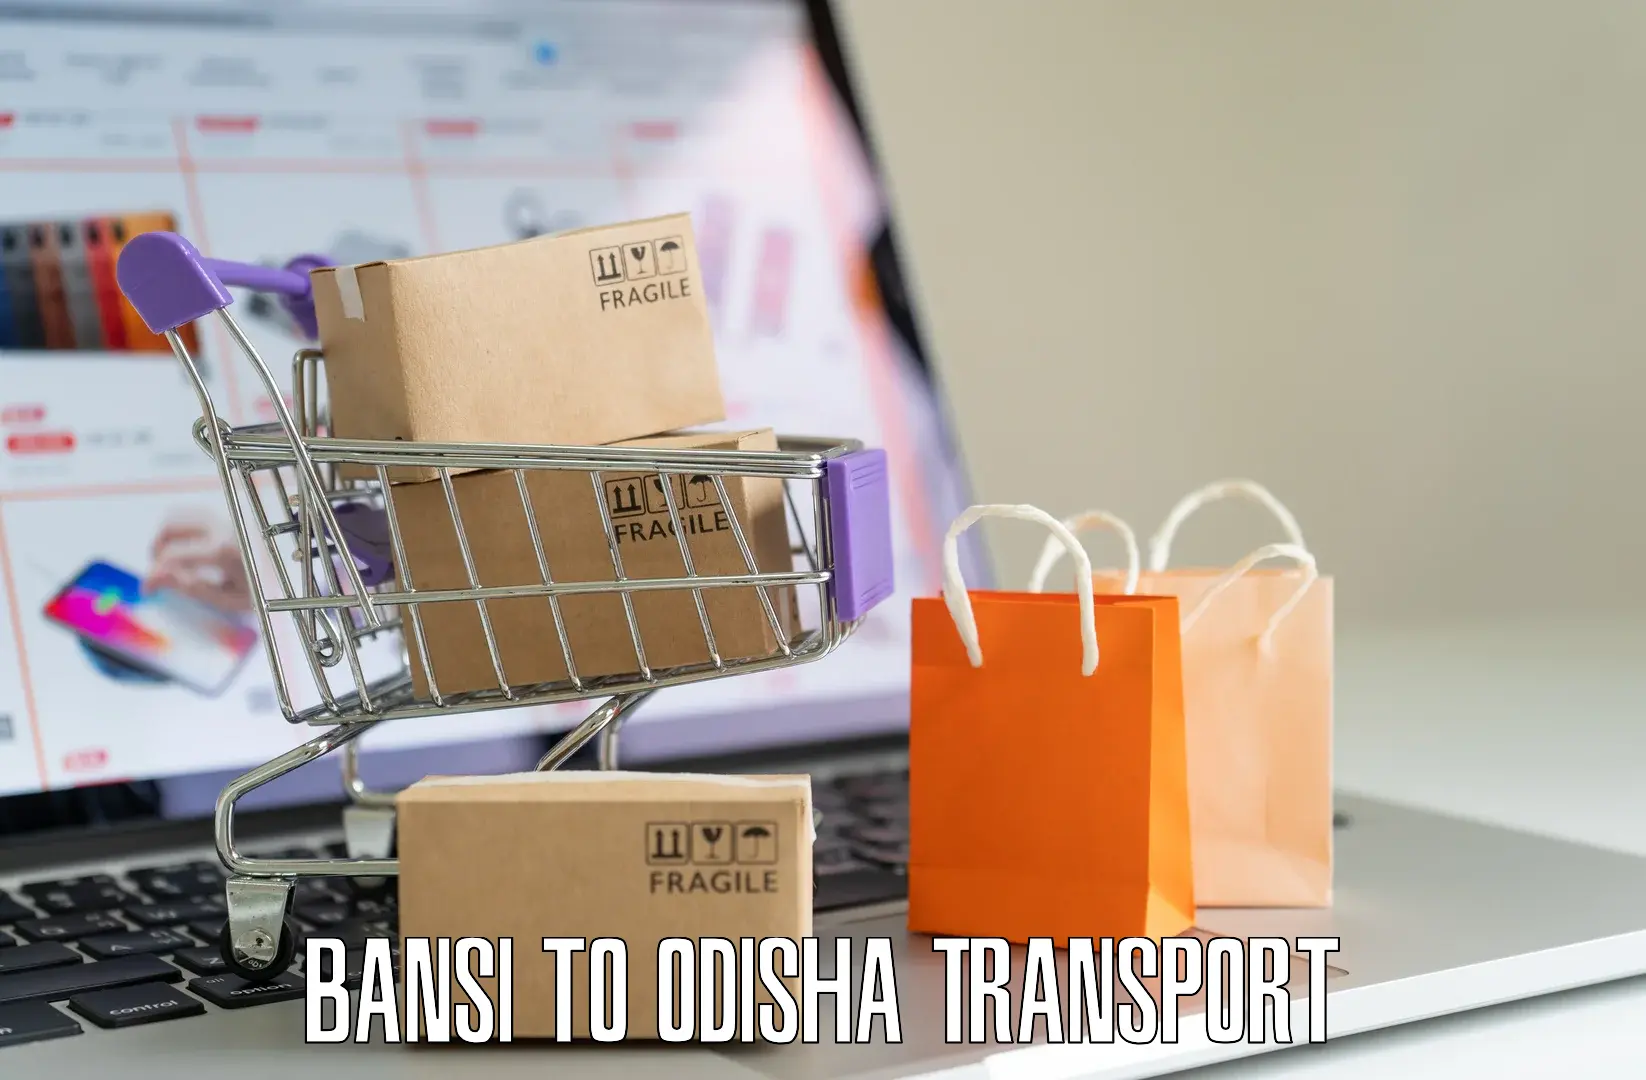 Two wheeler parcel service in Bansi to Bonth